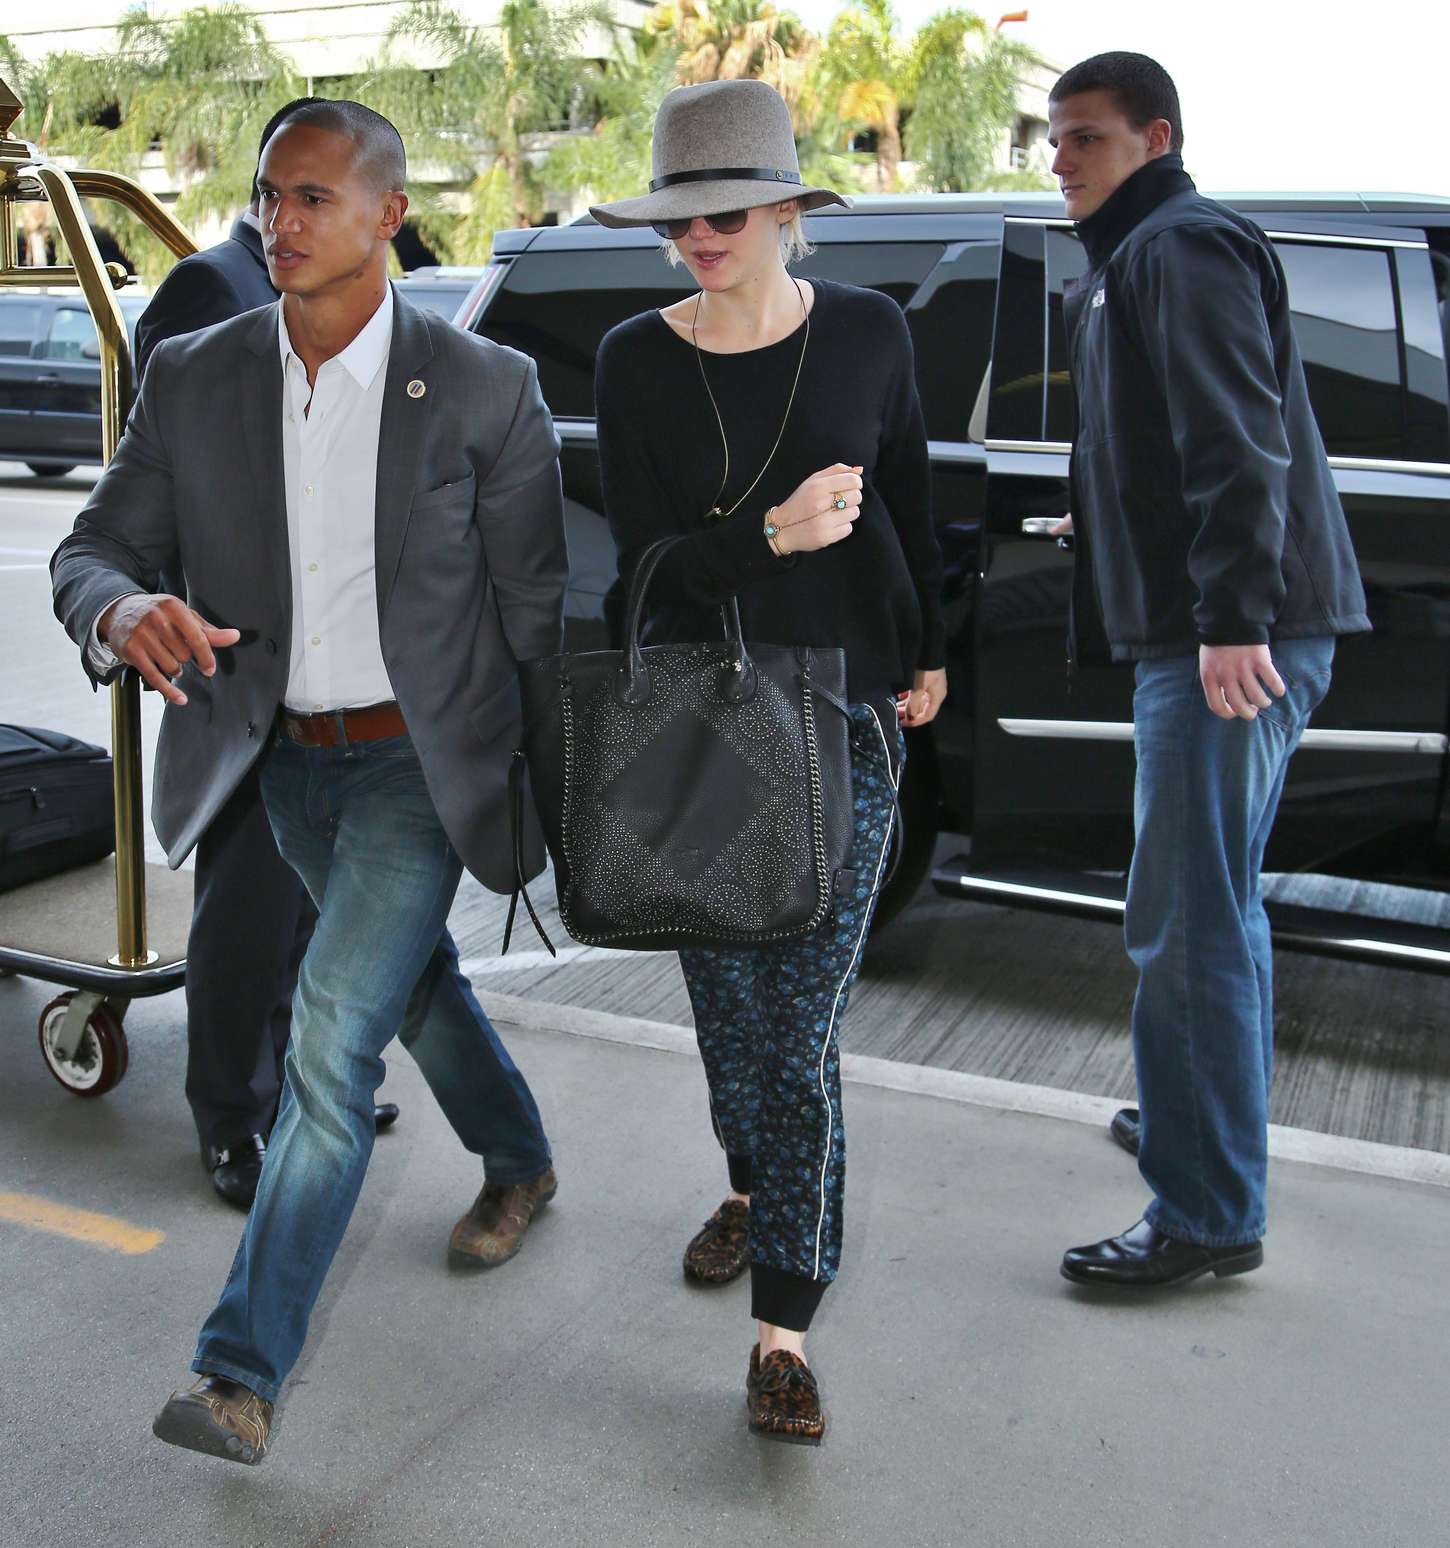 Jennifer Lawrence at LAX Airport in LA. 